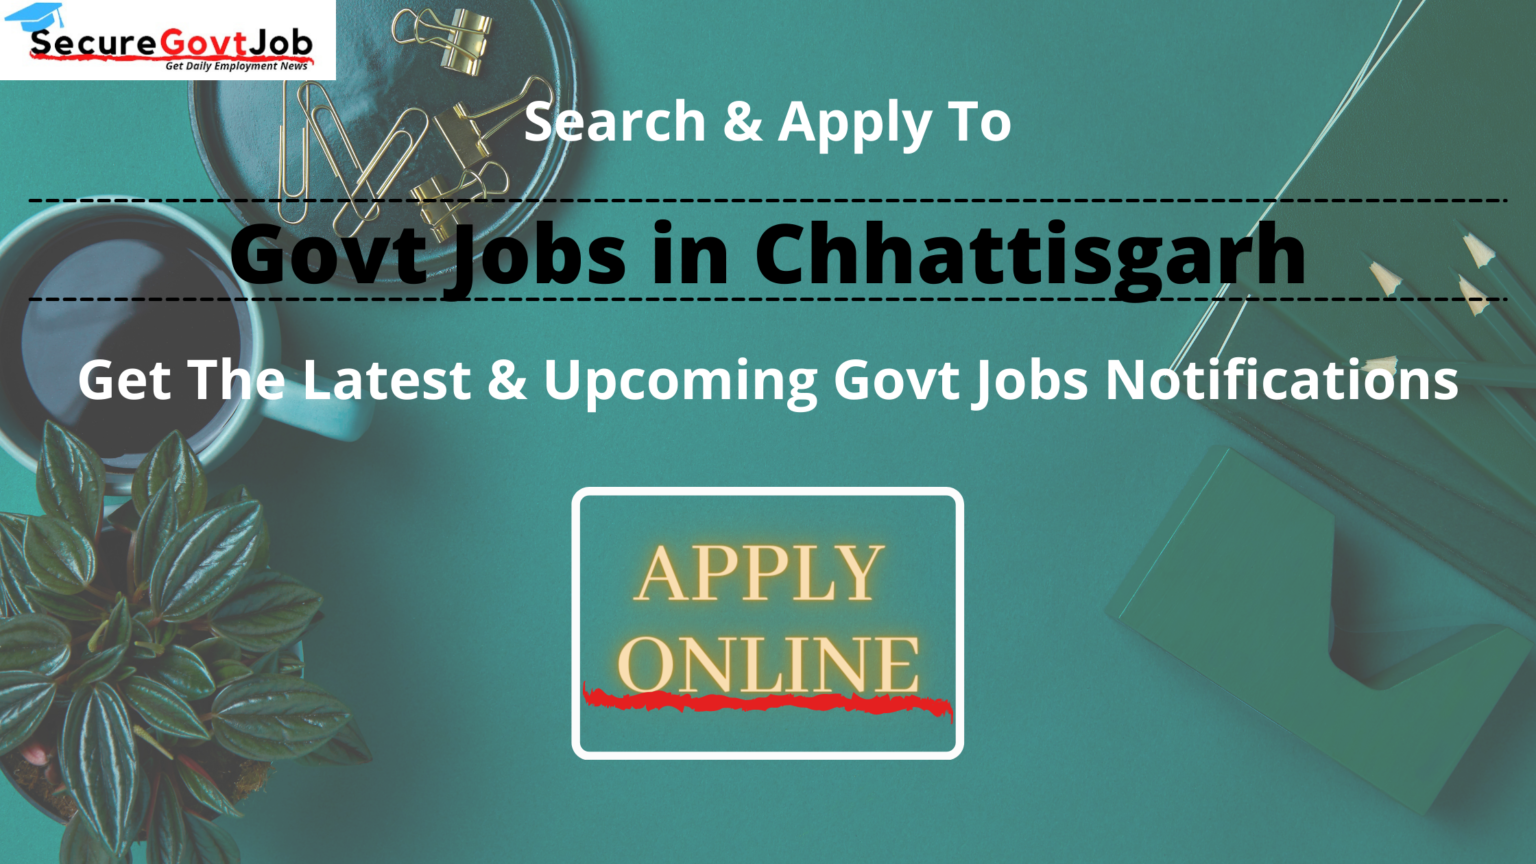 chhattisgarh tourism board jobs